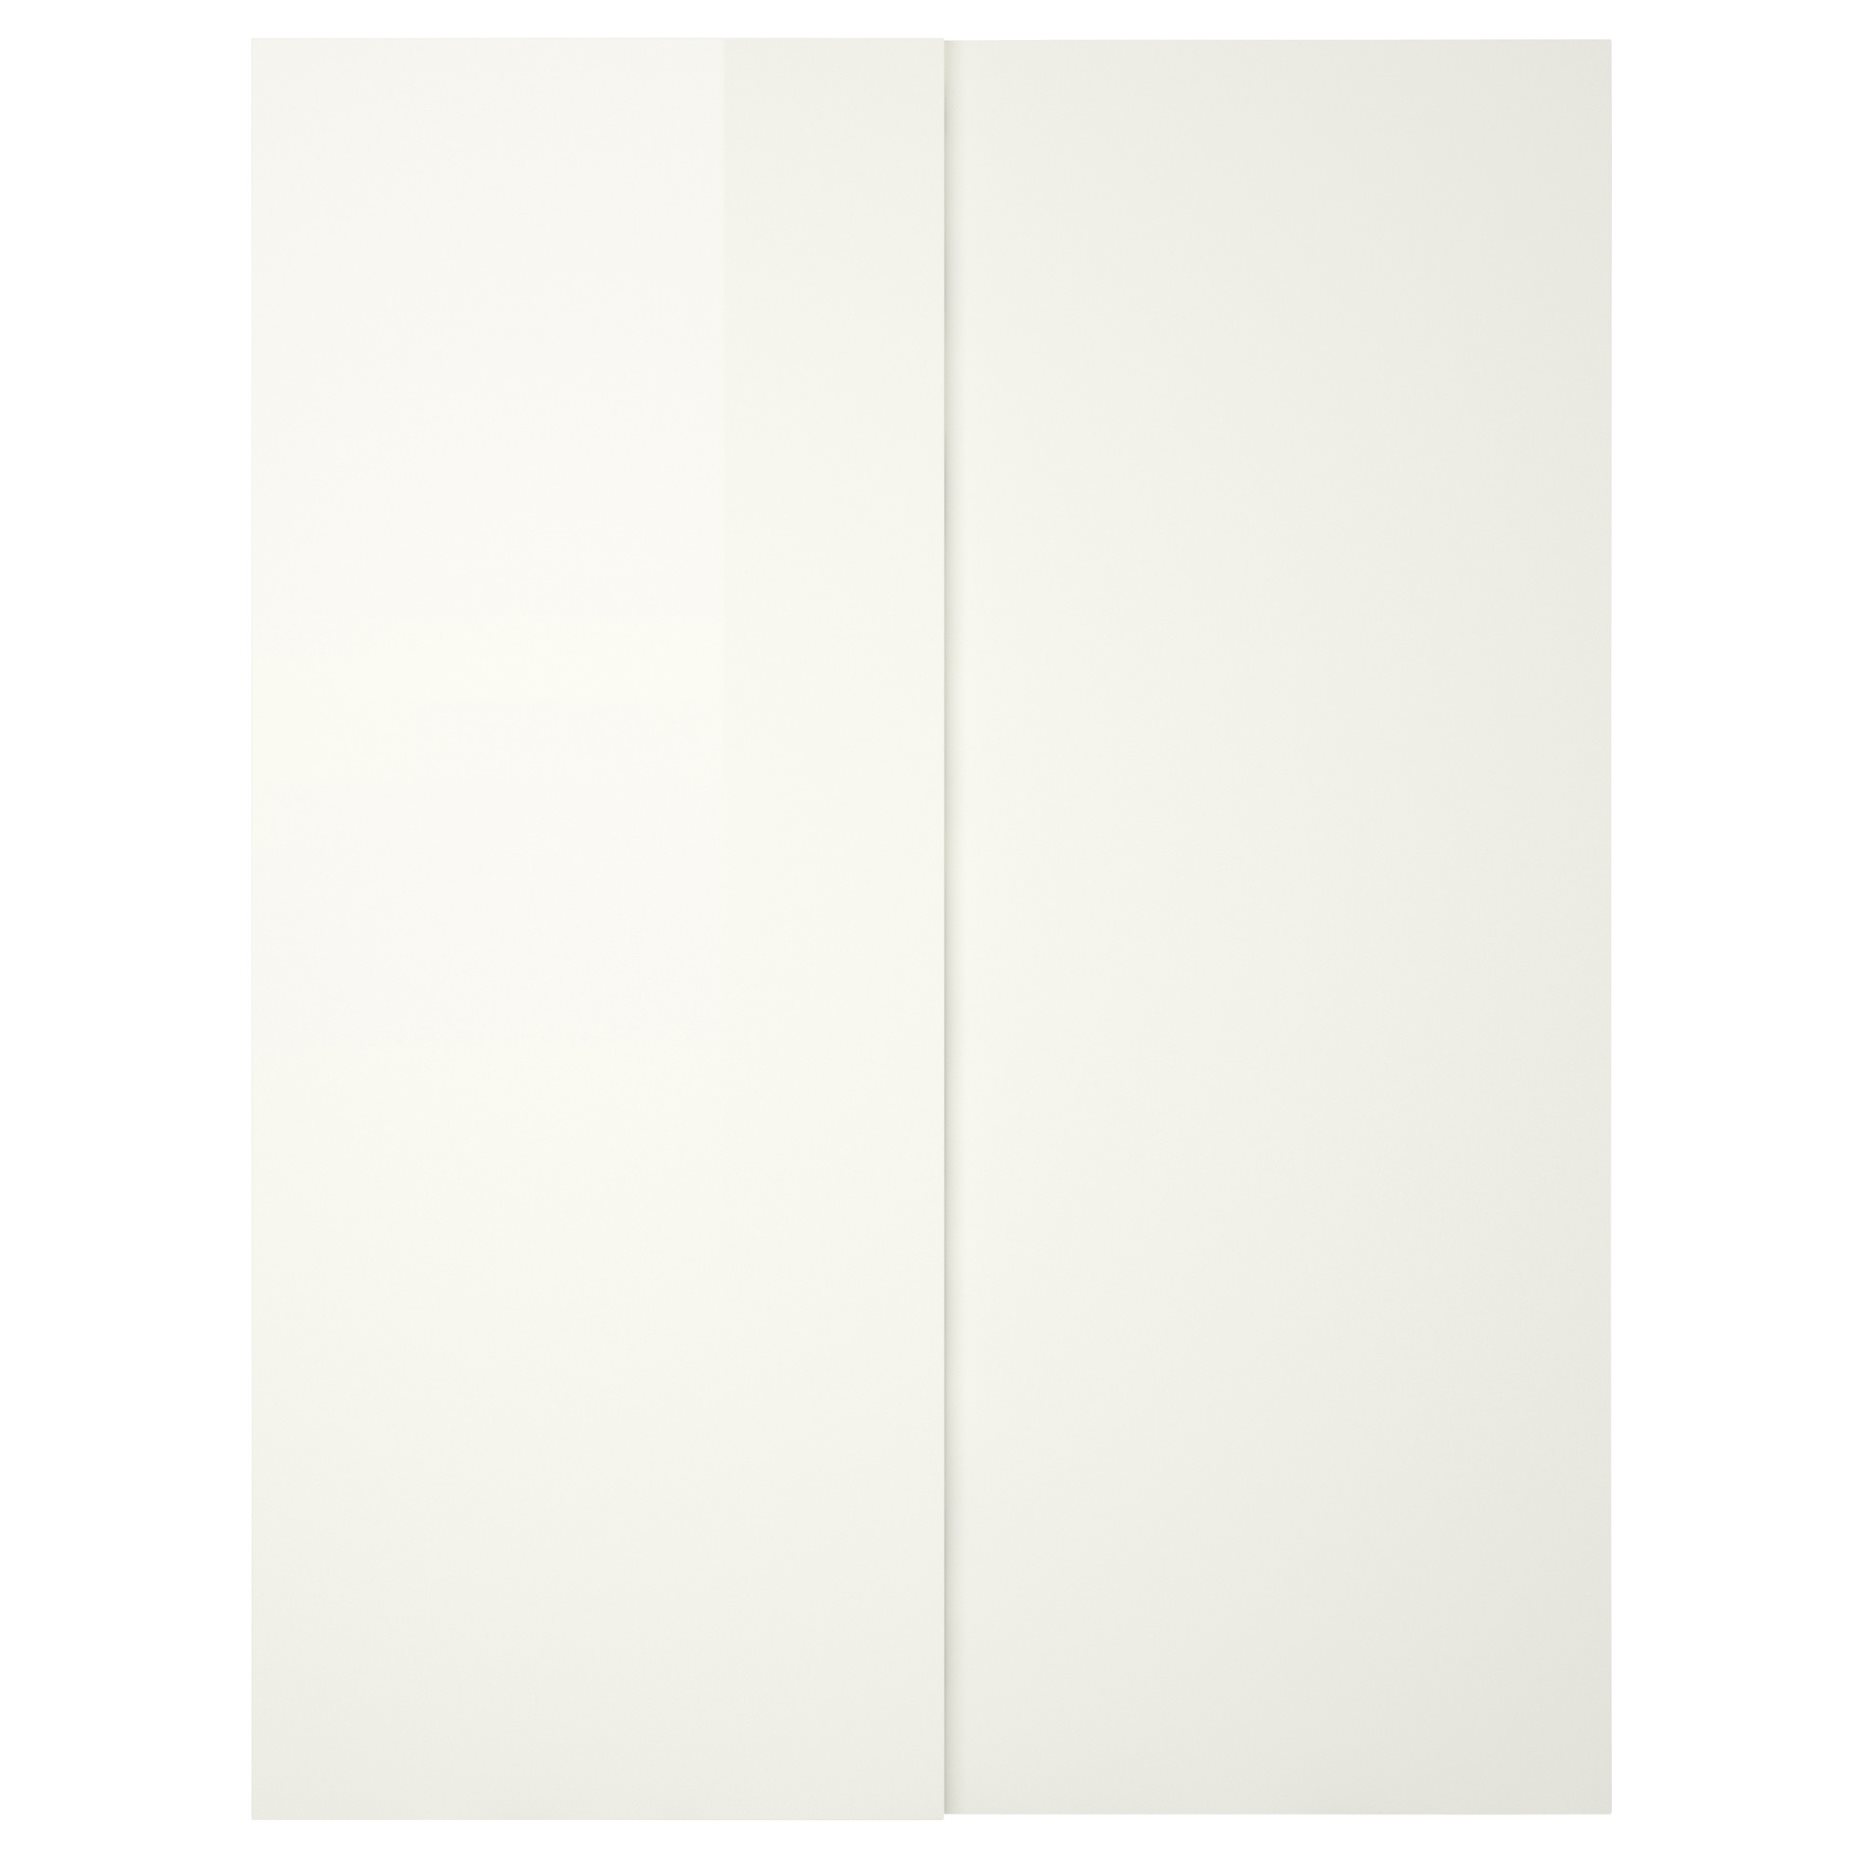 HASVIK, pair of sliding doors/high-gloss, 150x236 cm, 005.215.52